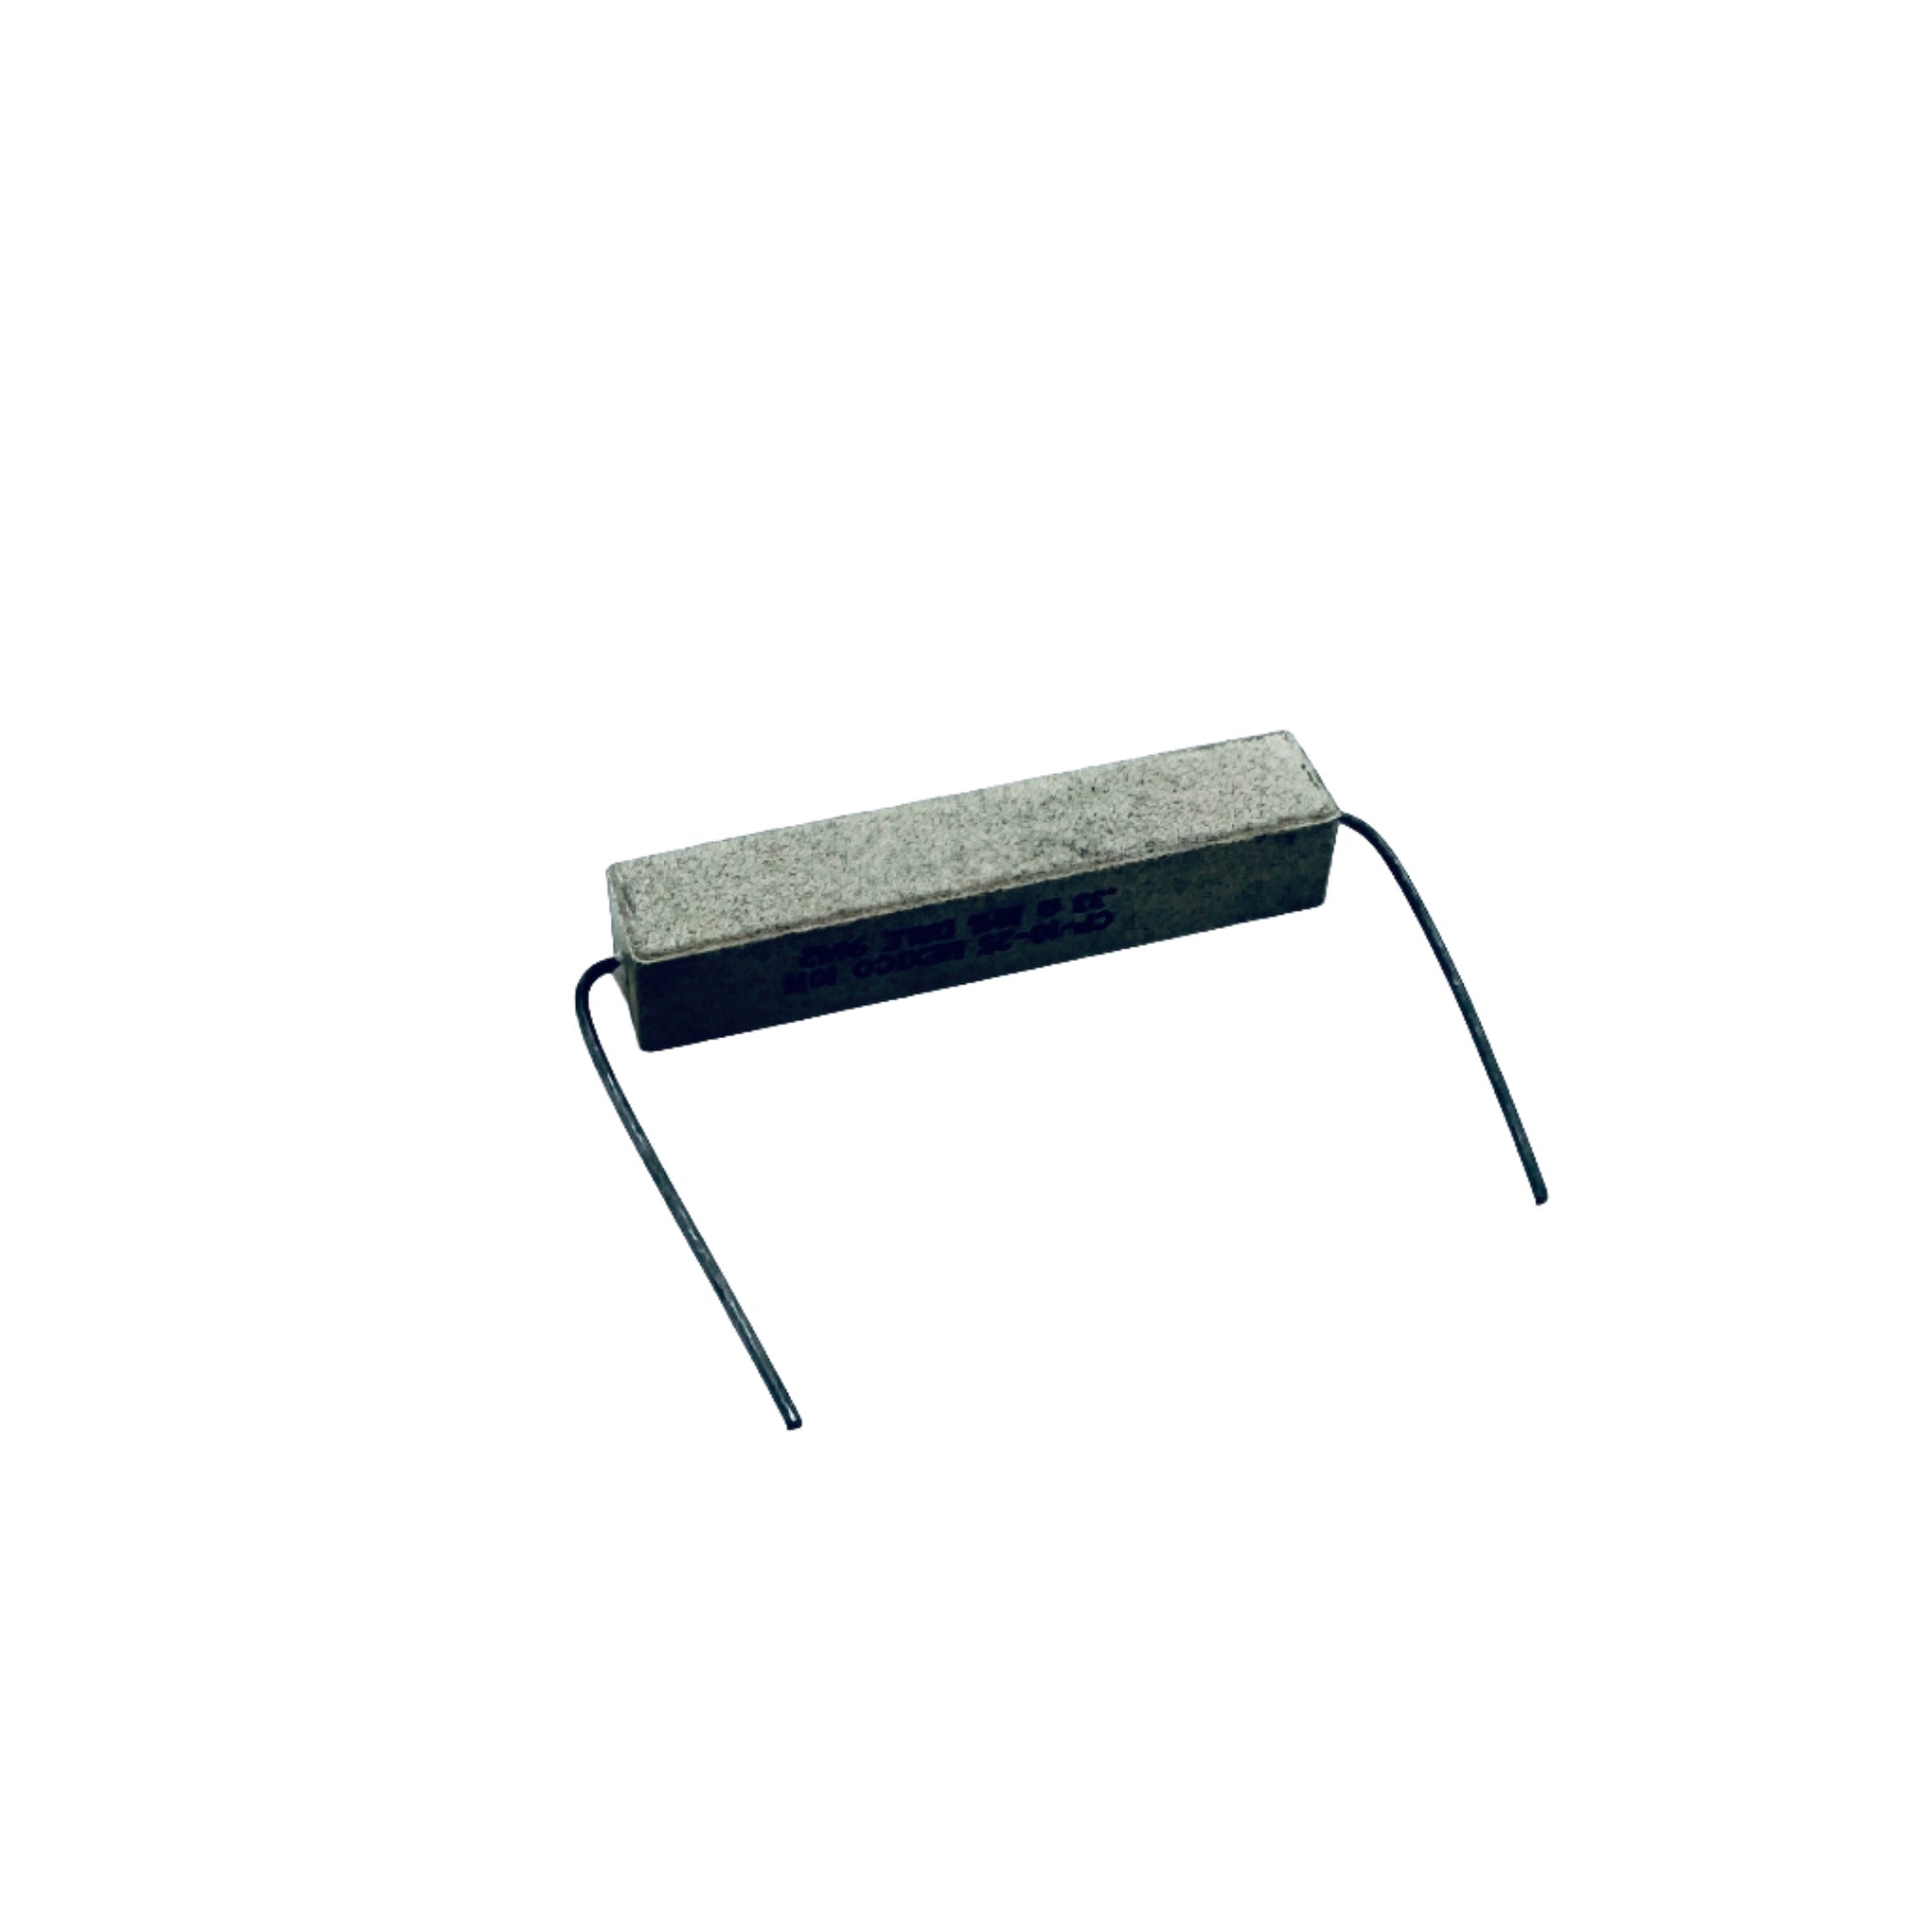 Peavey 30250011 .33 Ohm 10% 10 Watt Ceramic Resistor